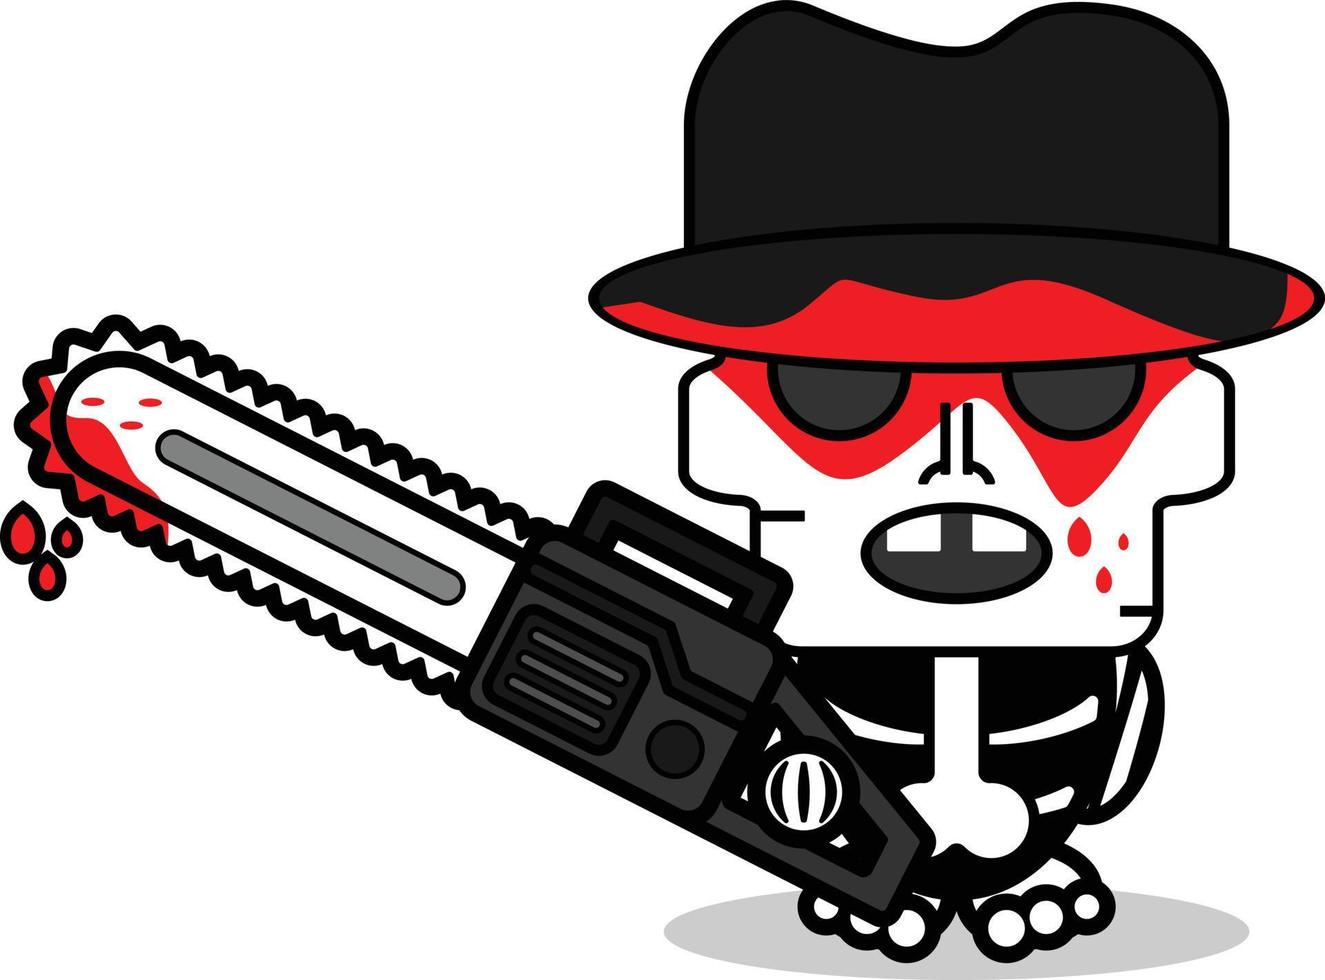 cute freddy krueger bone mascot character cartoon vector illustration holding bloody saw machine